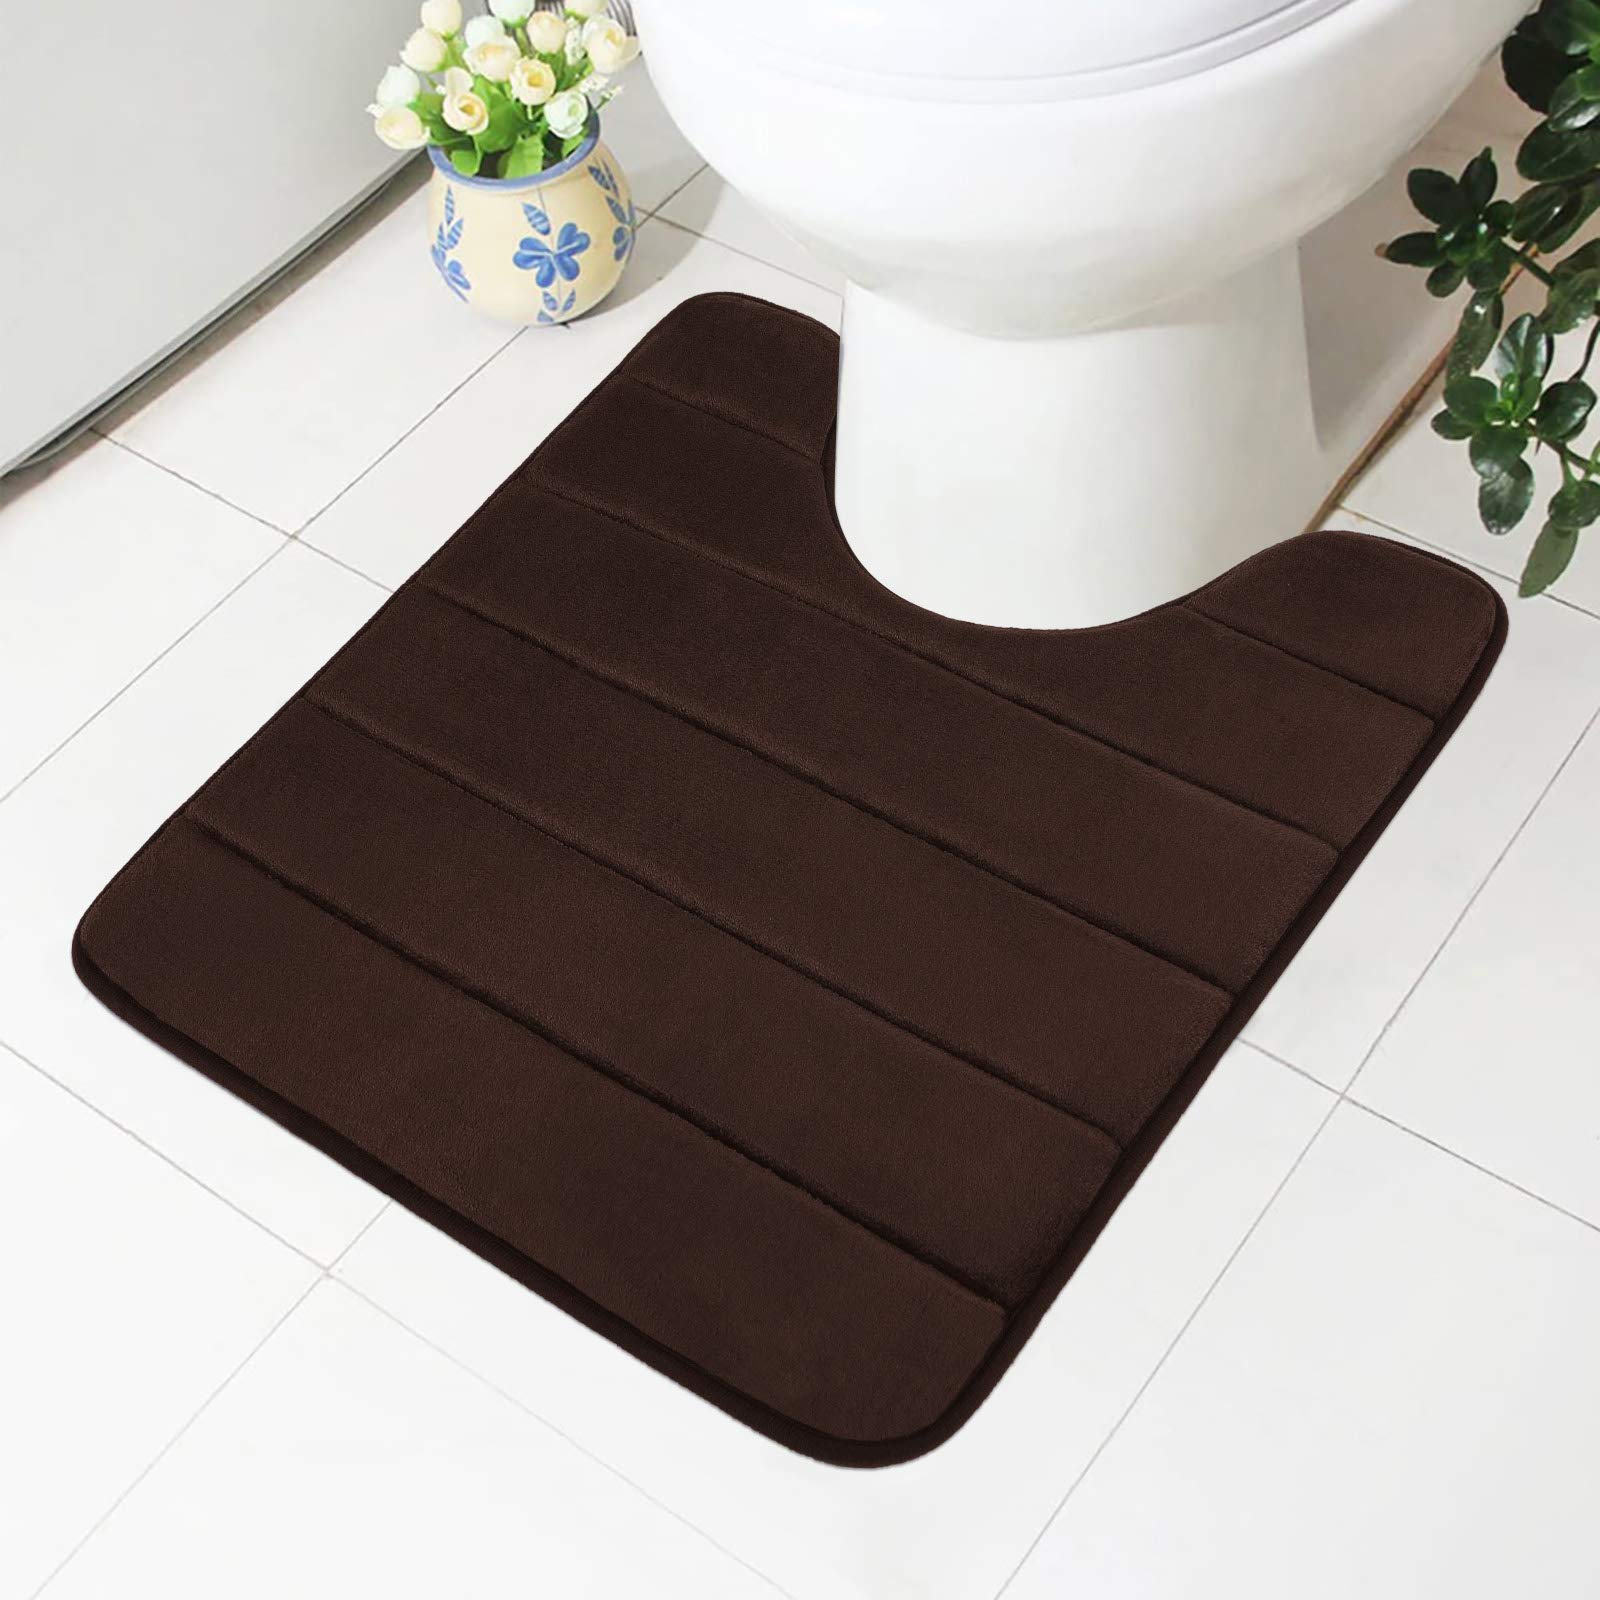 Smiry Memory Foam Bathroom rugs Toilet mats, U-Shaped Contour Carpet, 20" x 24", Coffee - image 1 of 8